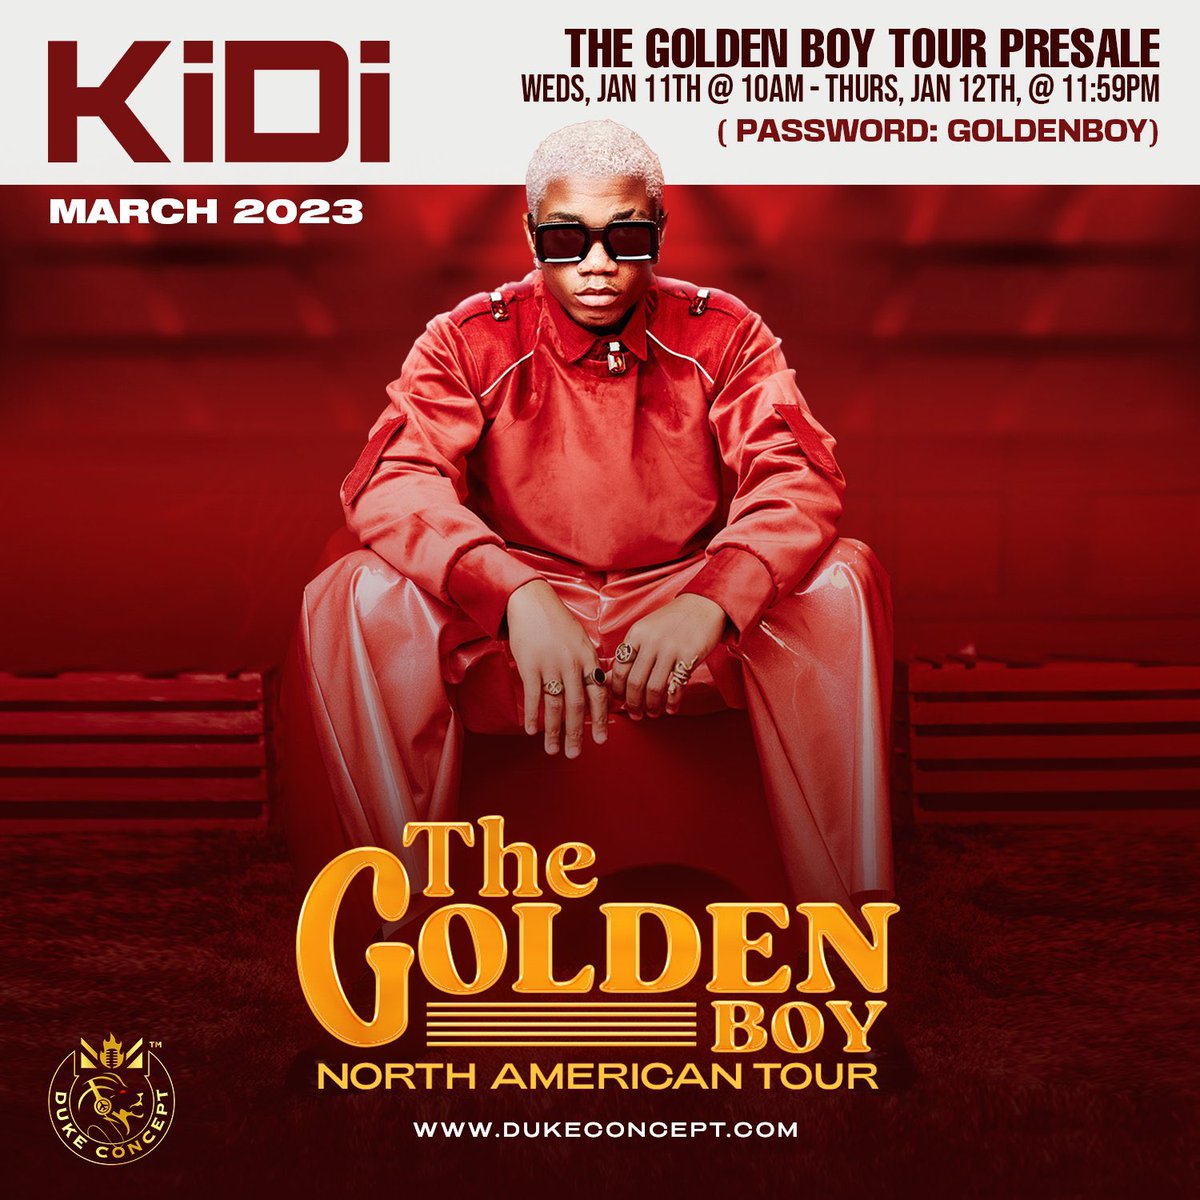 #Fr3shOut
@KiDiMusic announces THE GOLDEN BOY North American Tour dates 🙌🏾🔥
#ThisIsTheCulture #3MusicTV #GhanaMusic